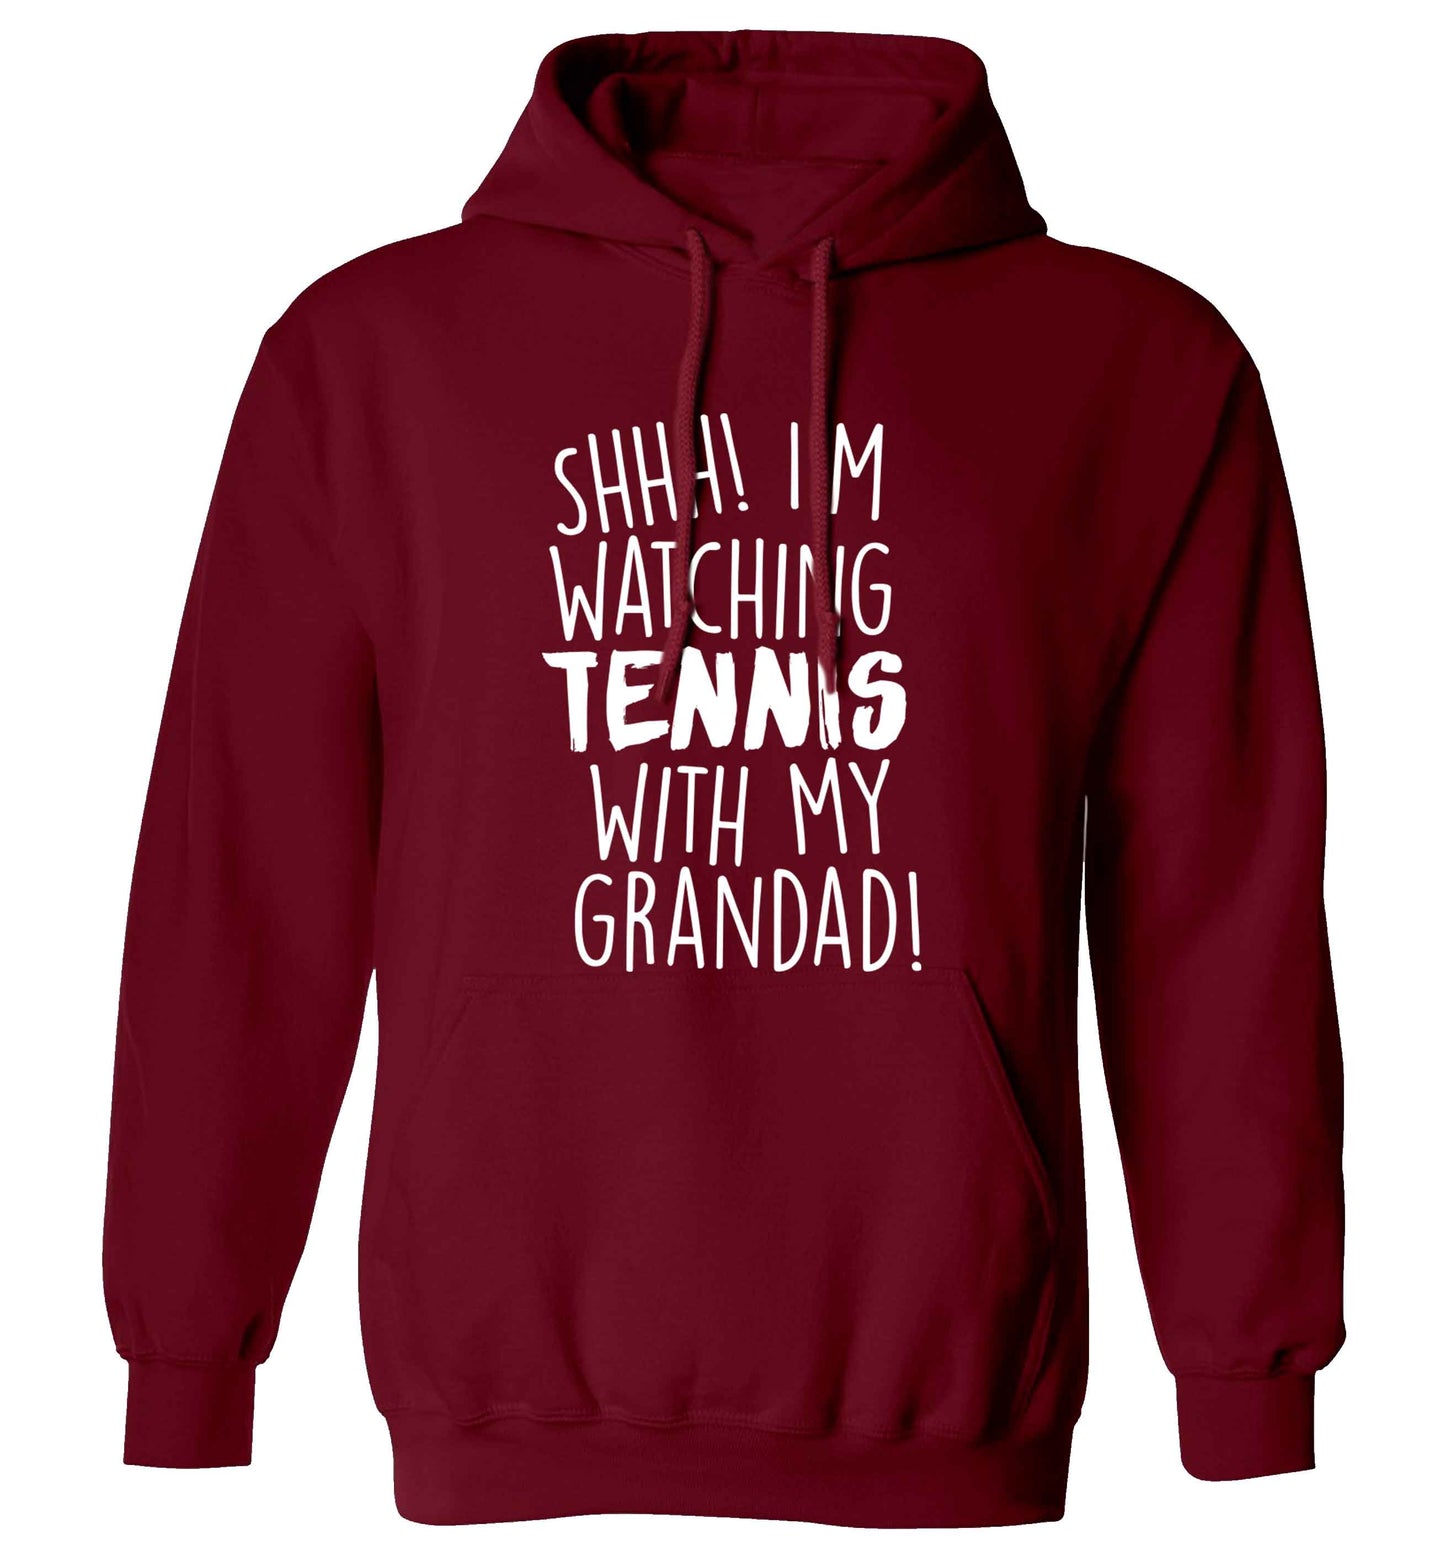 Shh! I'm watching tennis with my grandad! adults unisex maroon hoodie 2XL